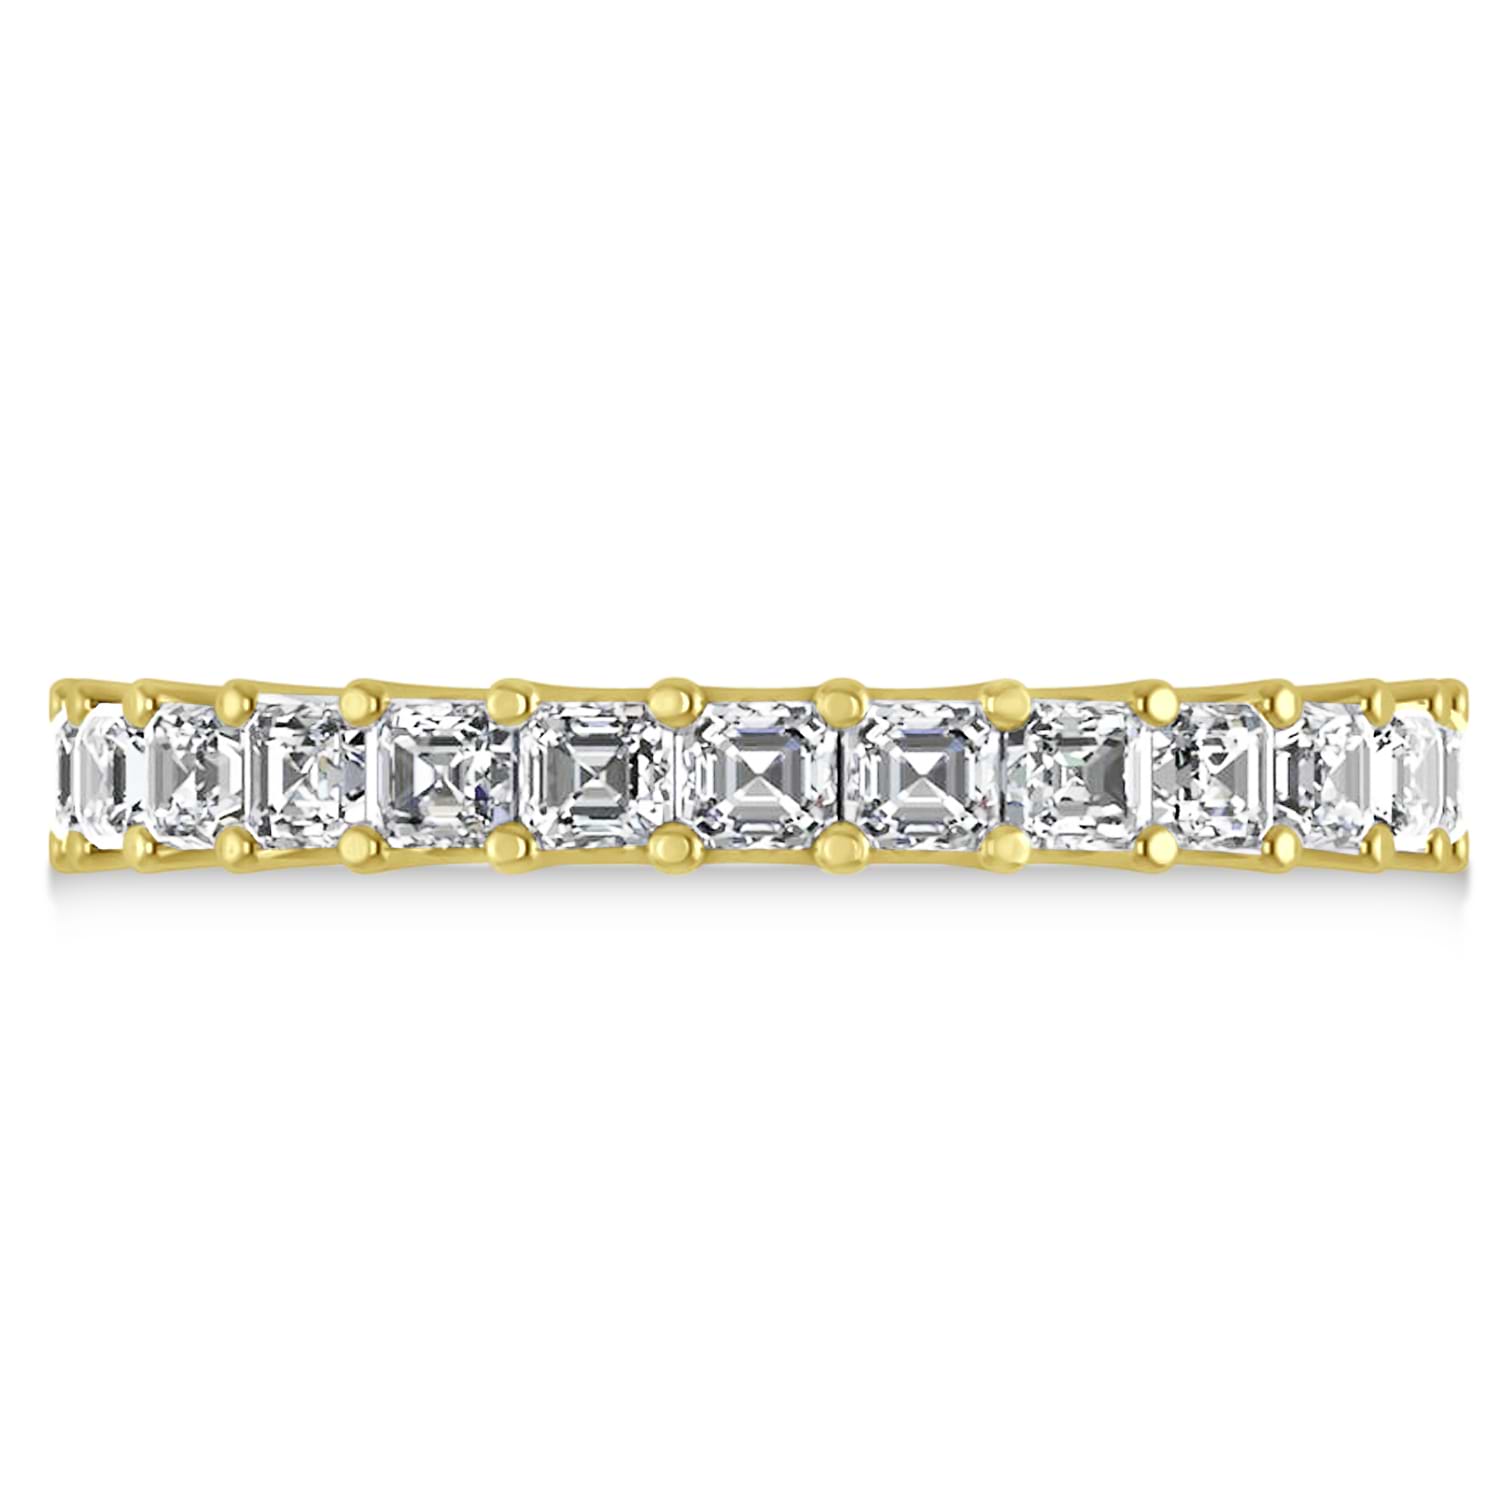 Radiant-Cut Diamond Eternity Wedding Band Ring 14k Yellow Gold (2.60ct)